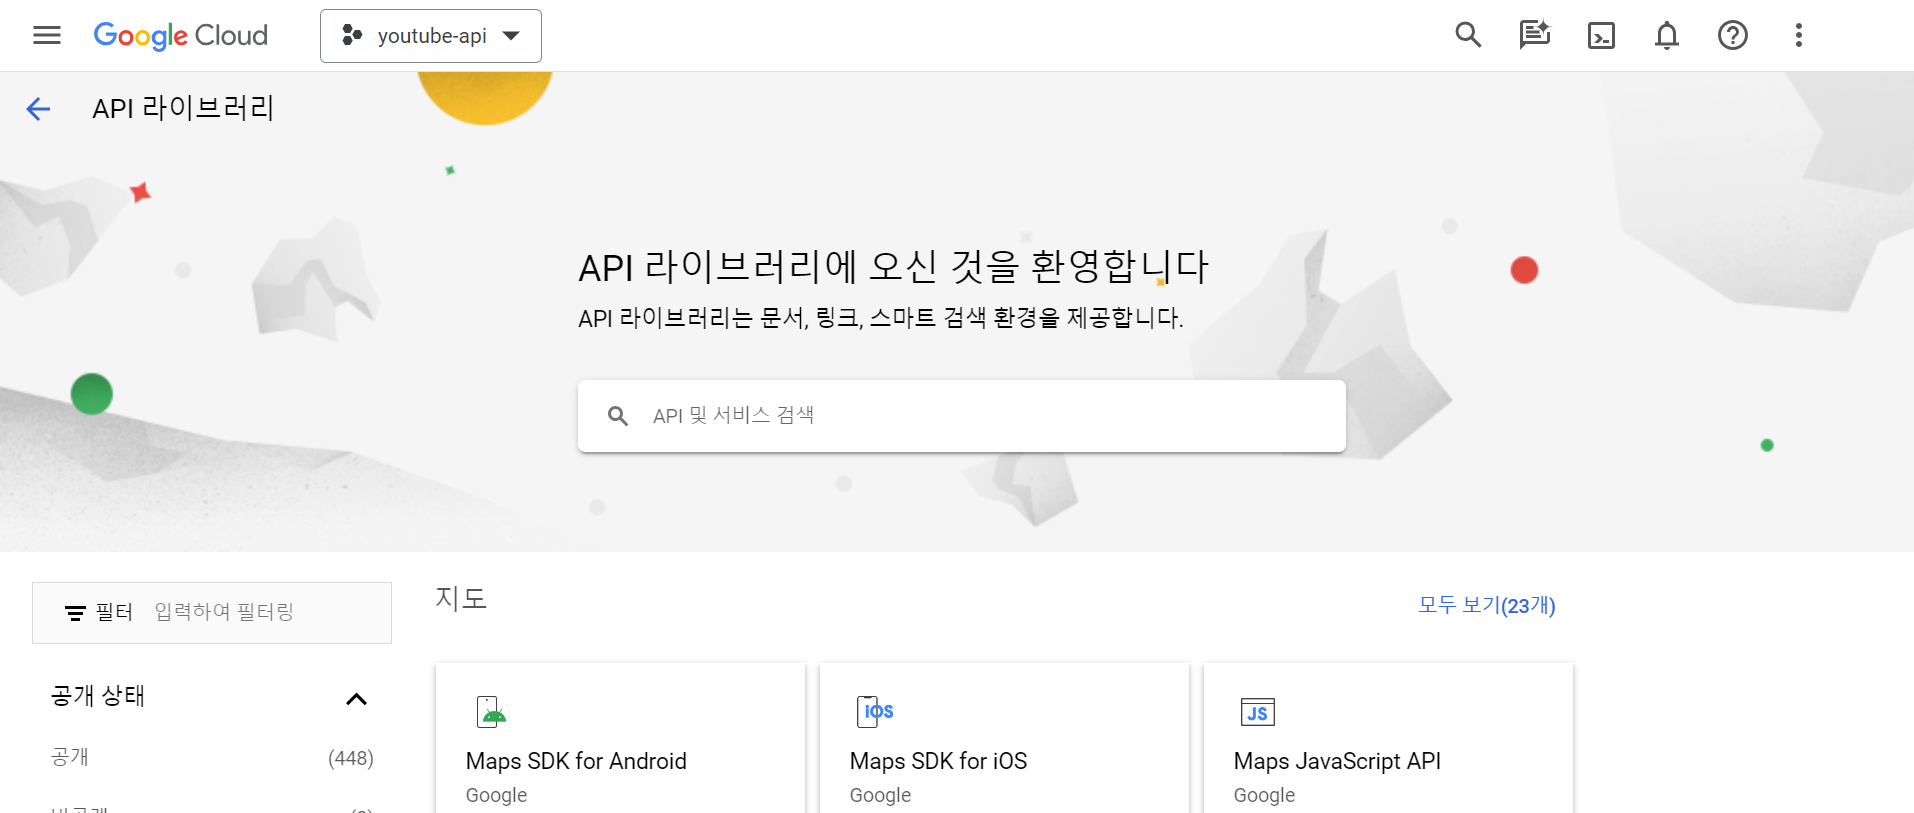 API 라이브러리 검색 화면